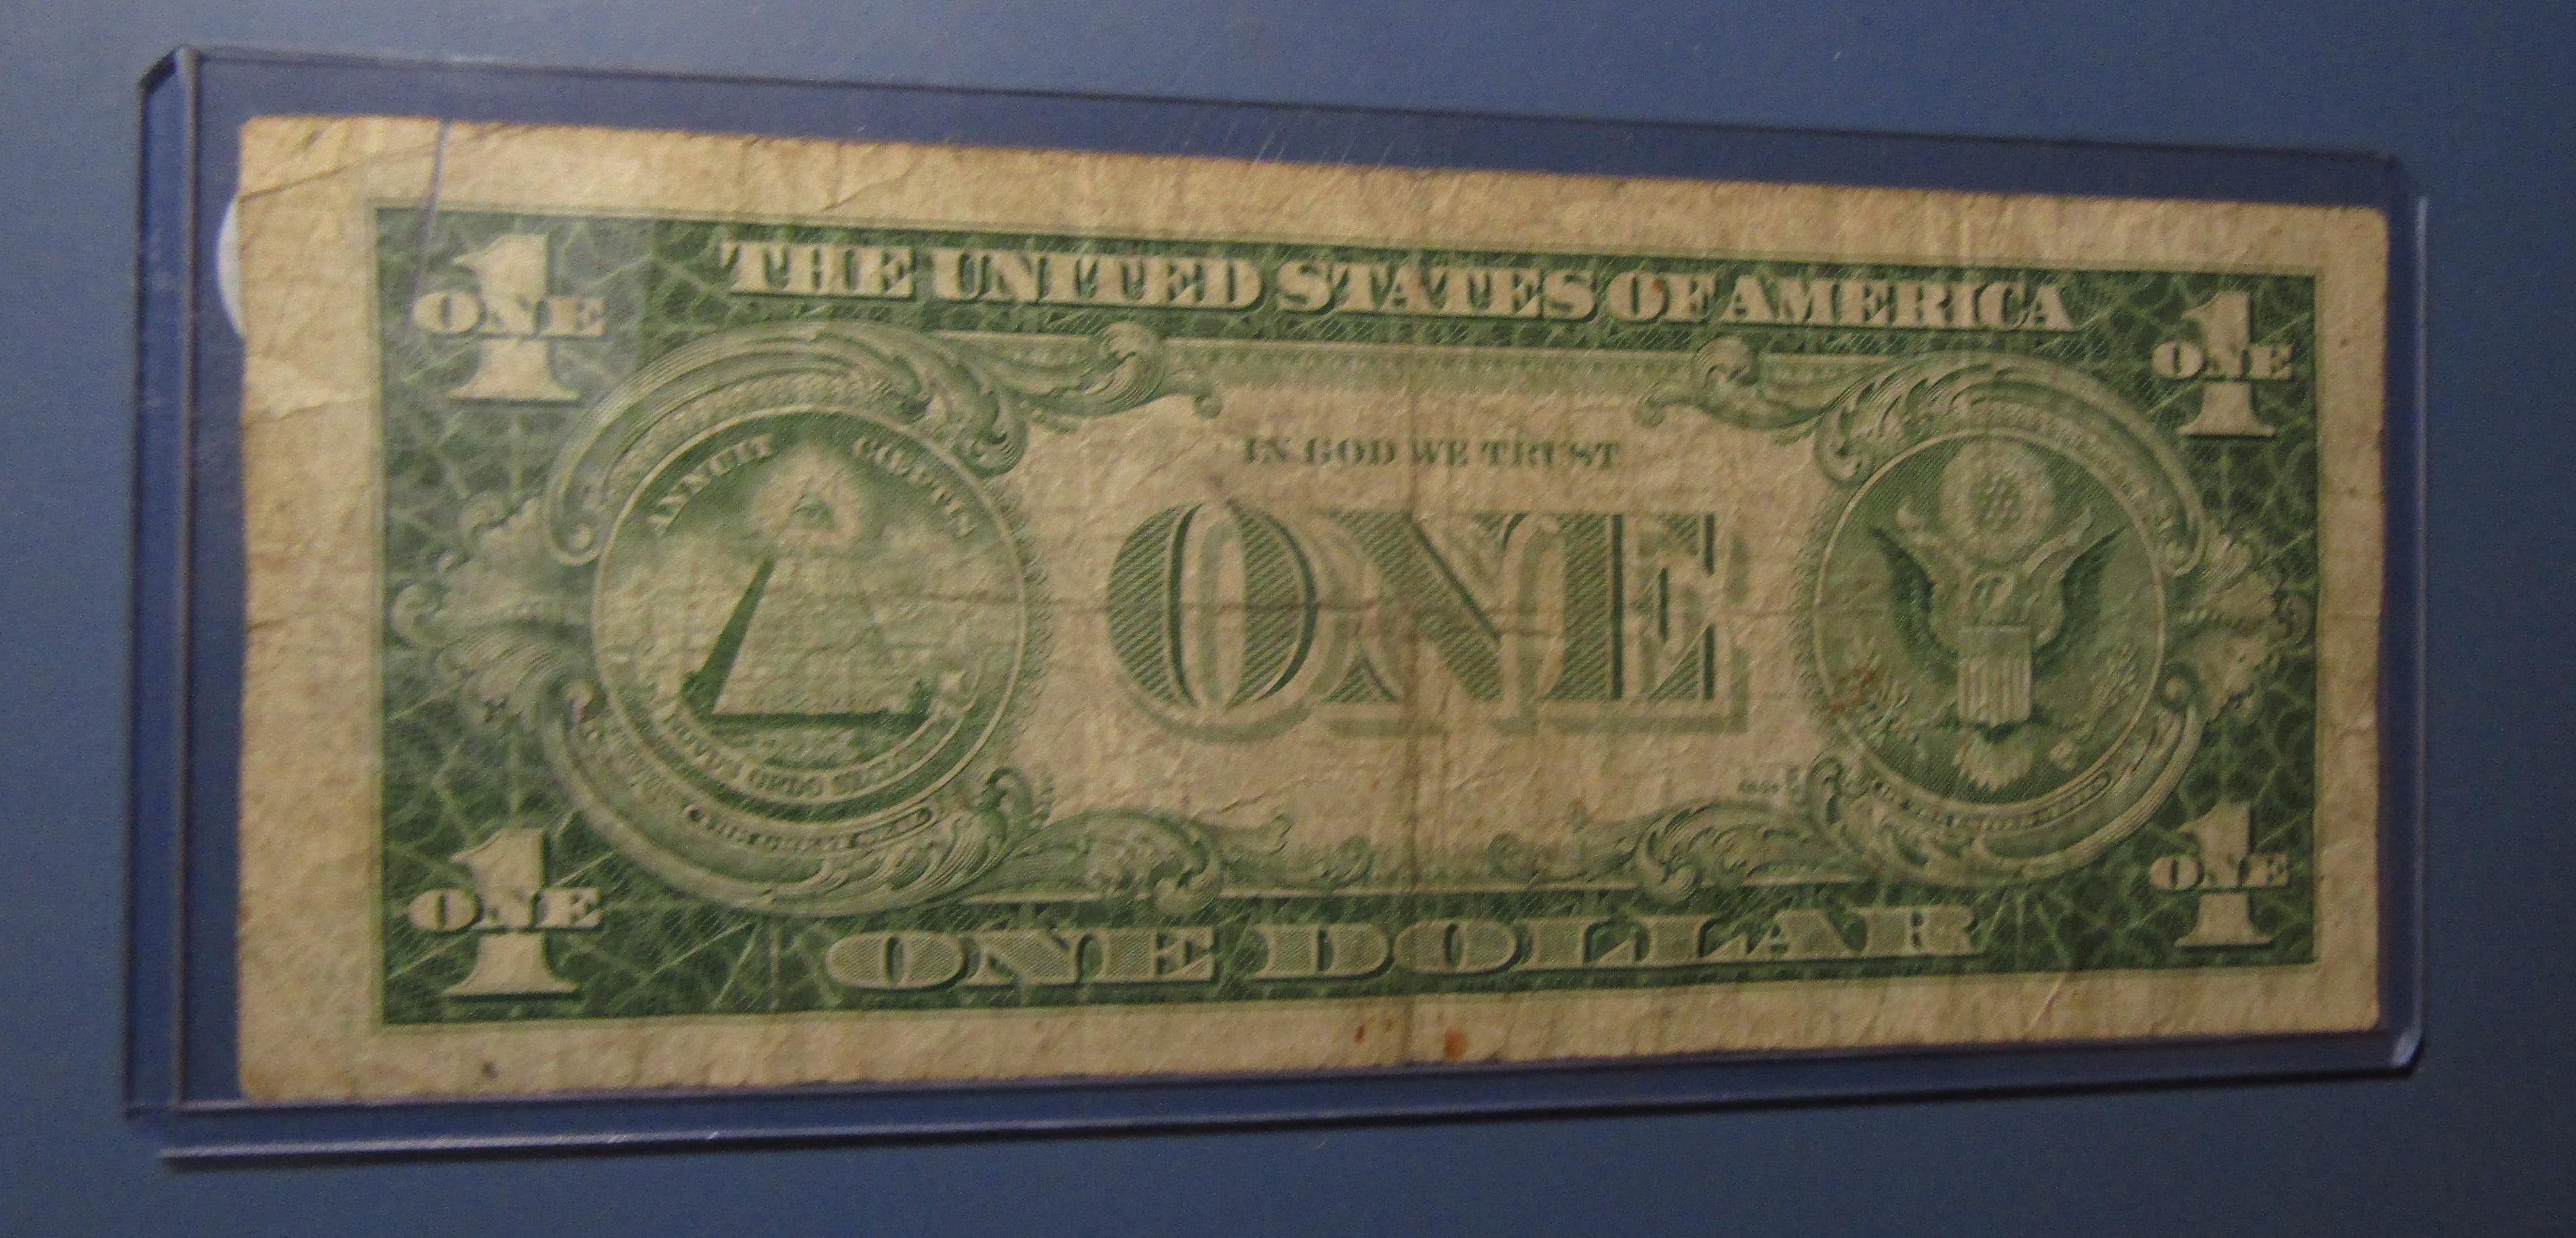 1935-G $1.00 SILVER CERTIFICATE NOTE FINE